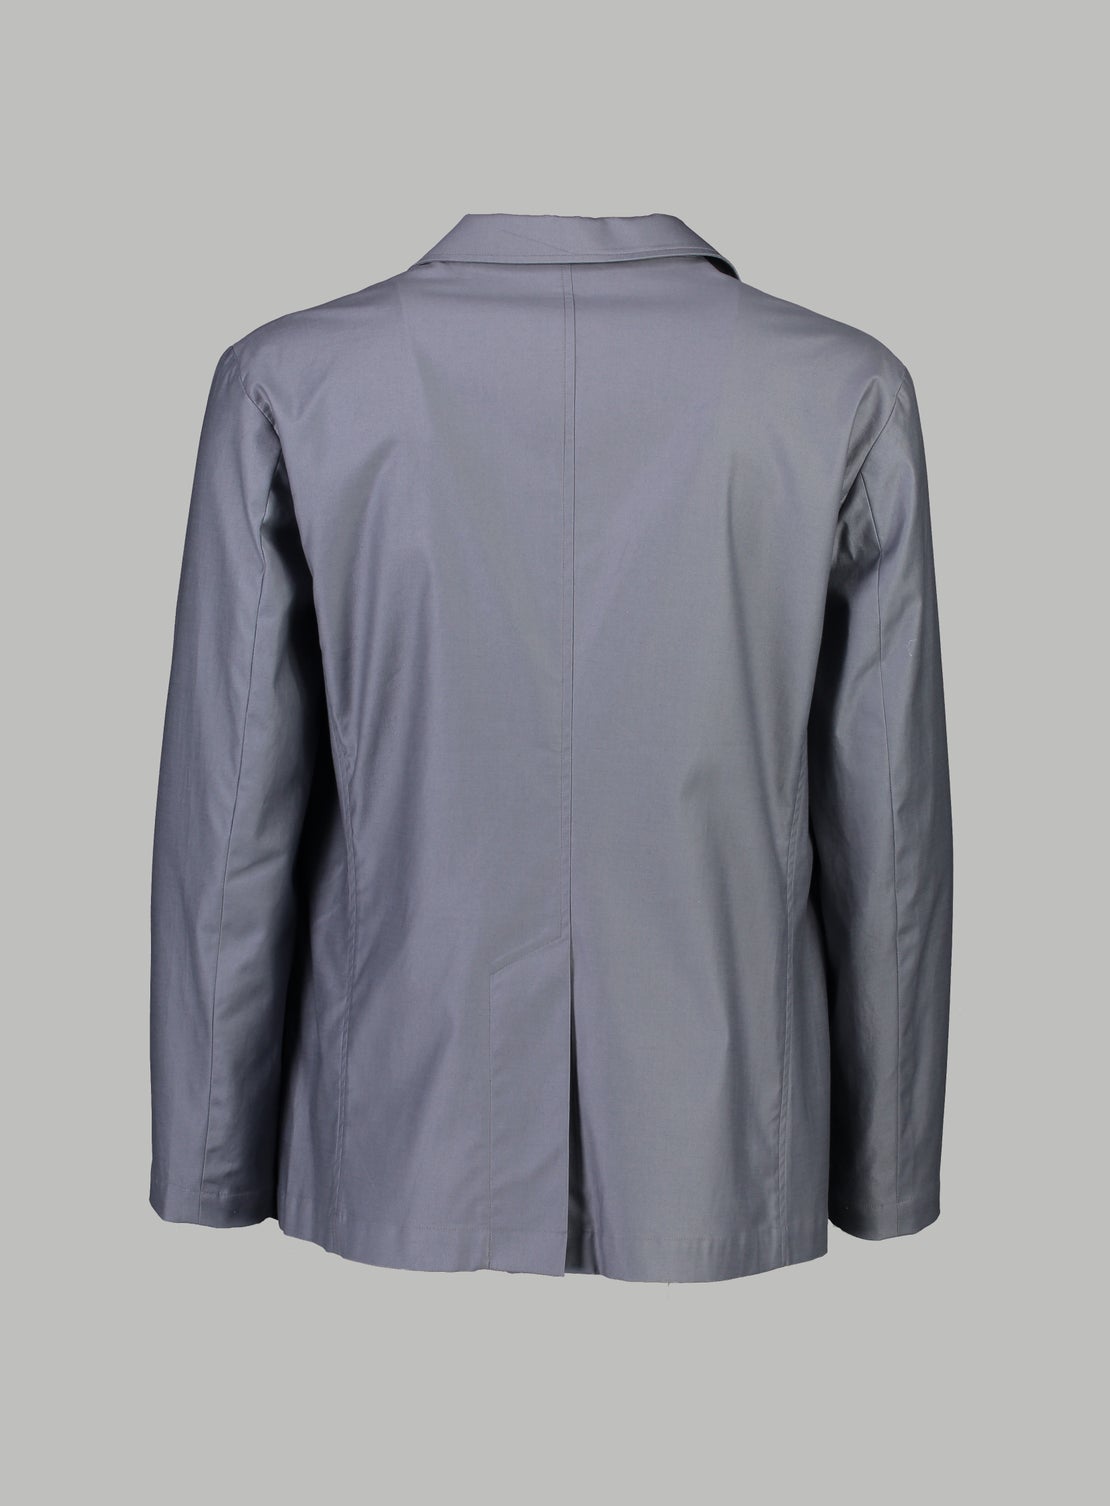 Foster Dove Grey Jacket